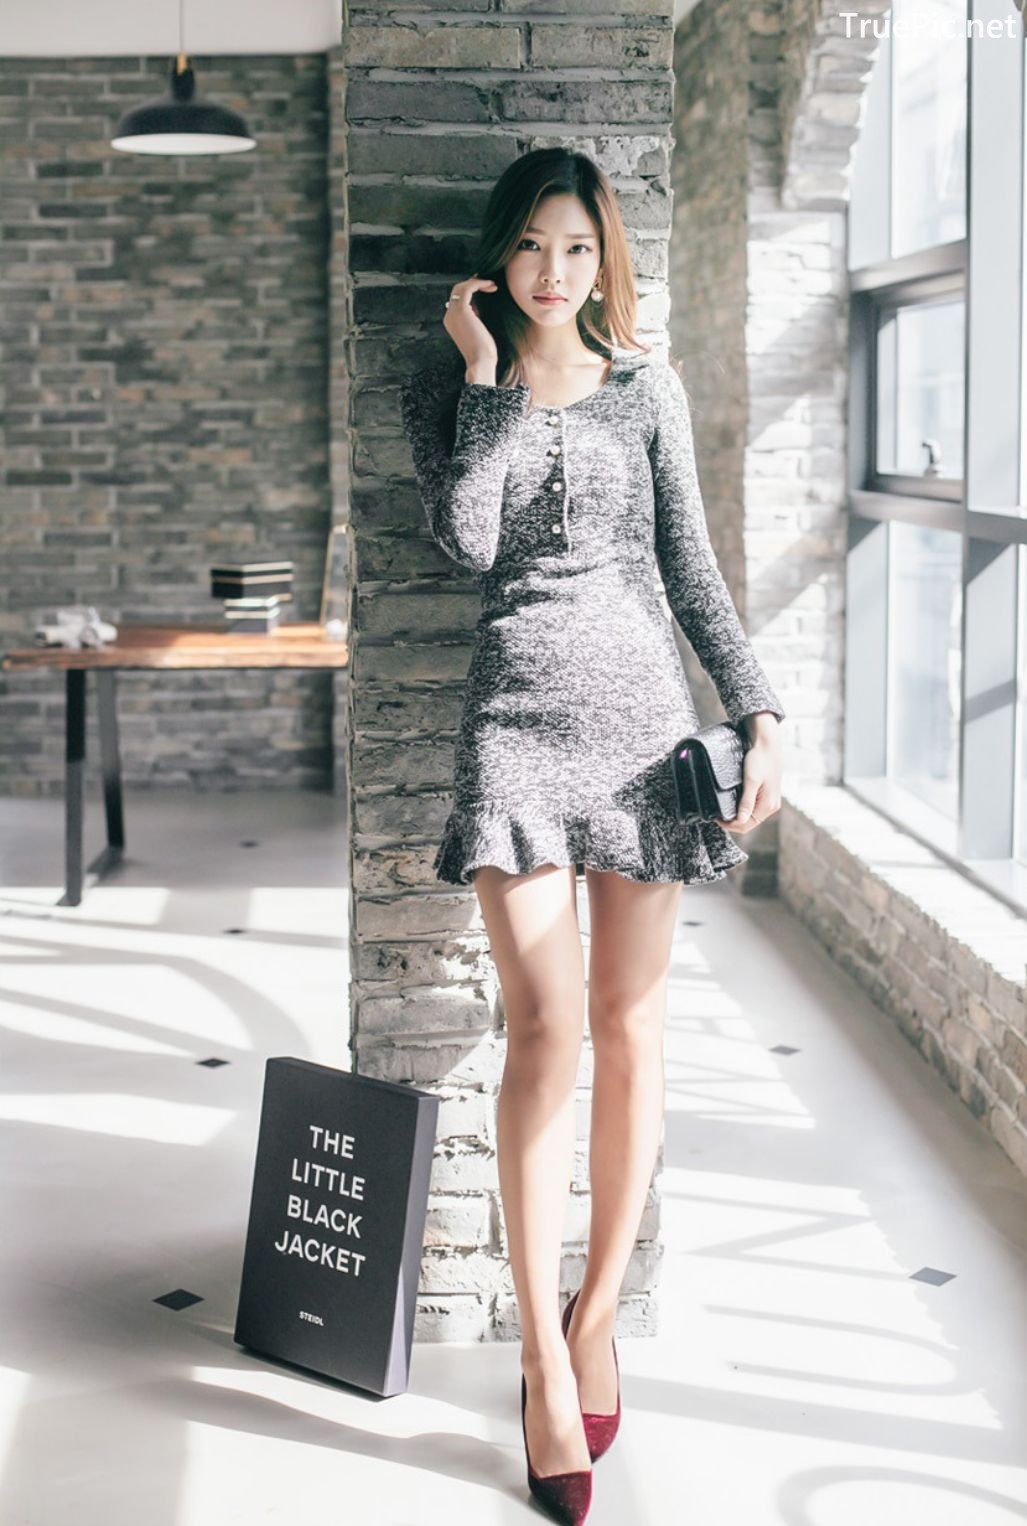 Image Korean Beautiful Model - Park Jung Yoon - Fashion Photography - TruePic.net - Picture-70